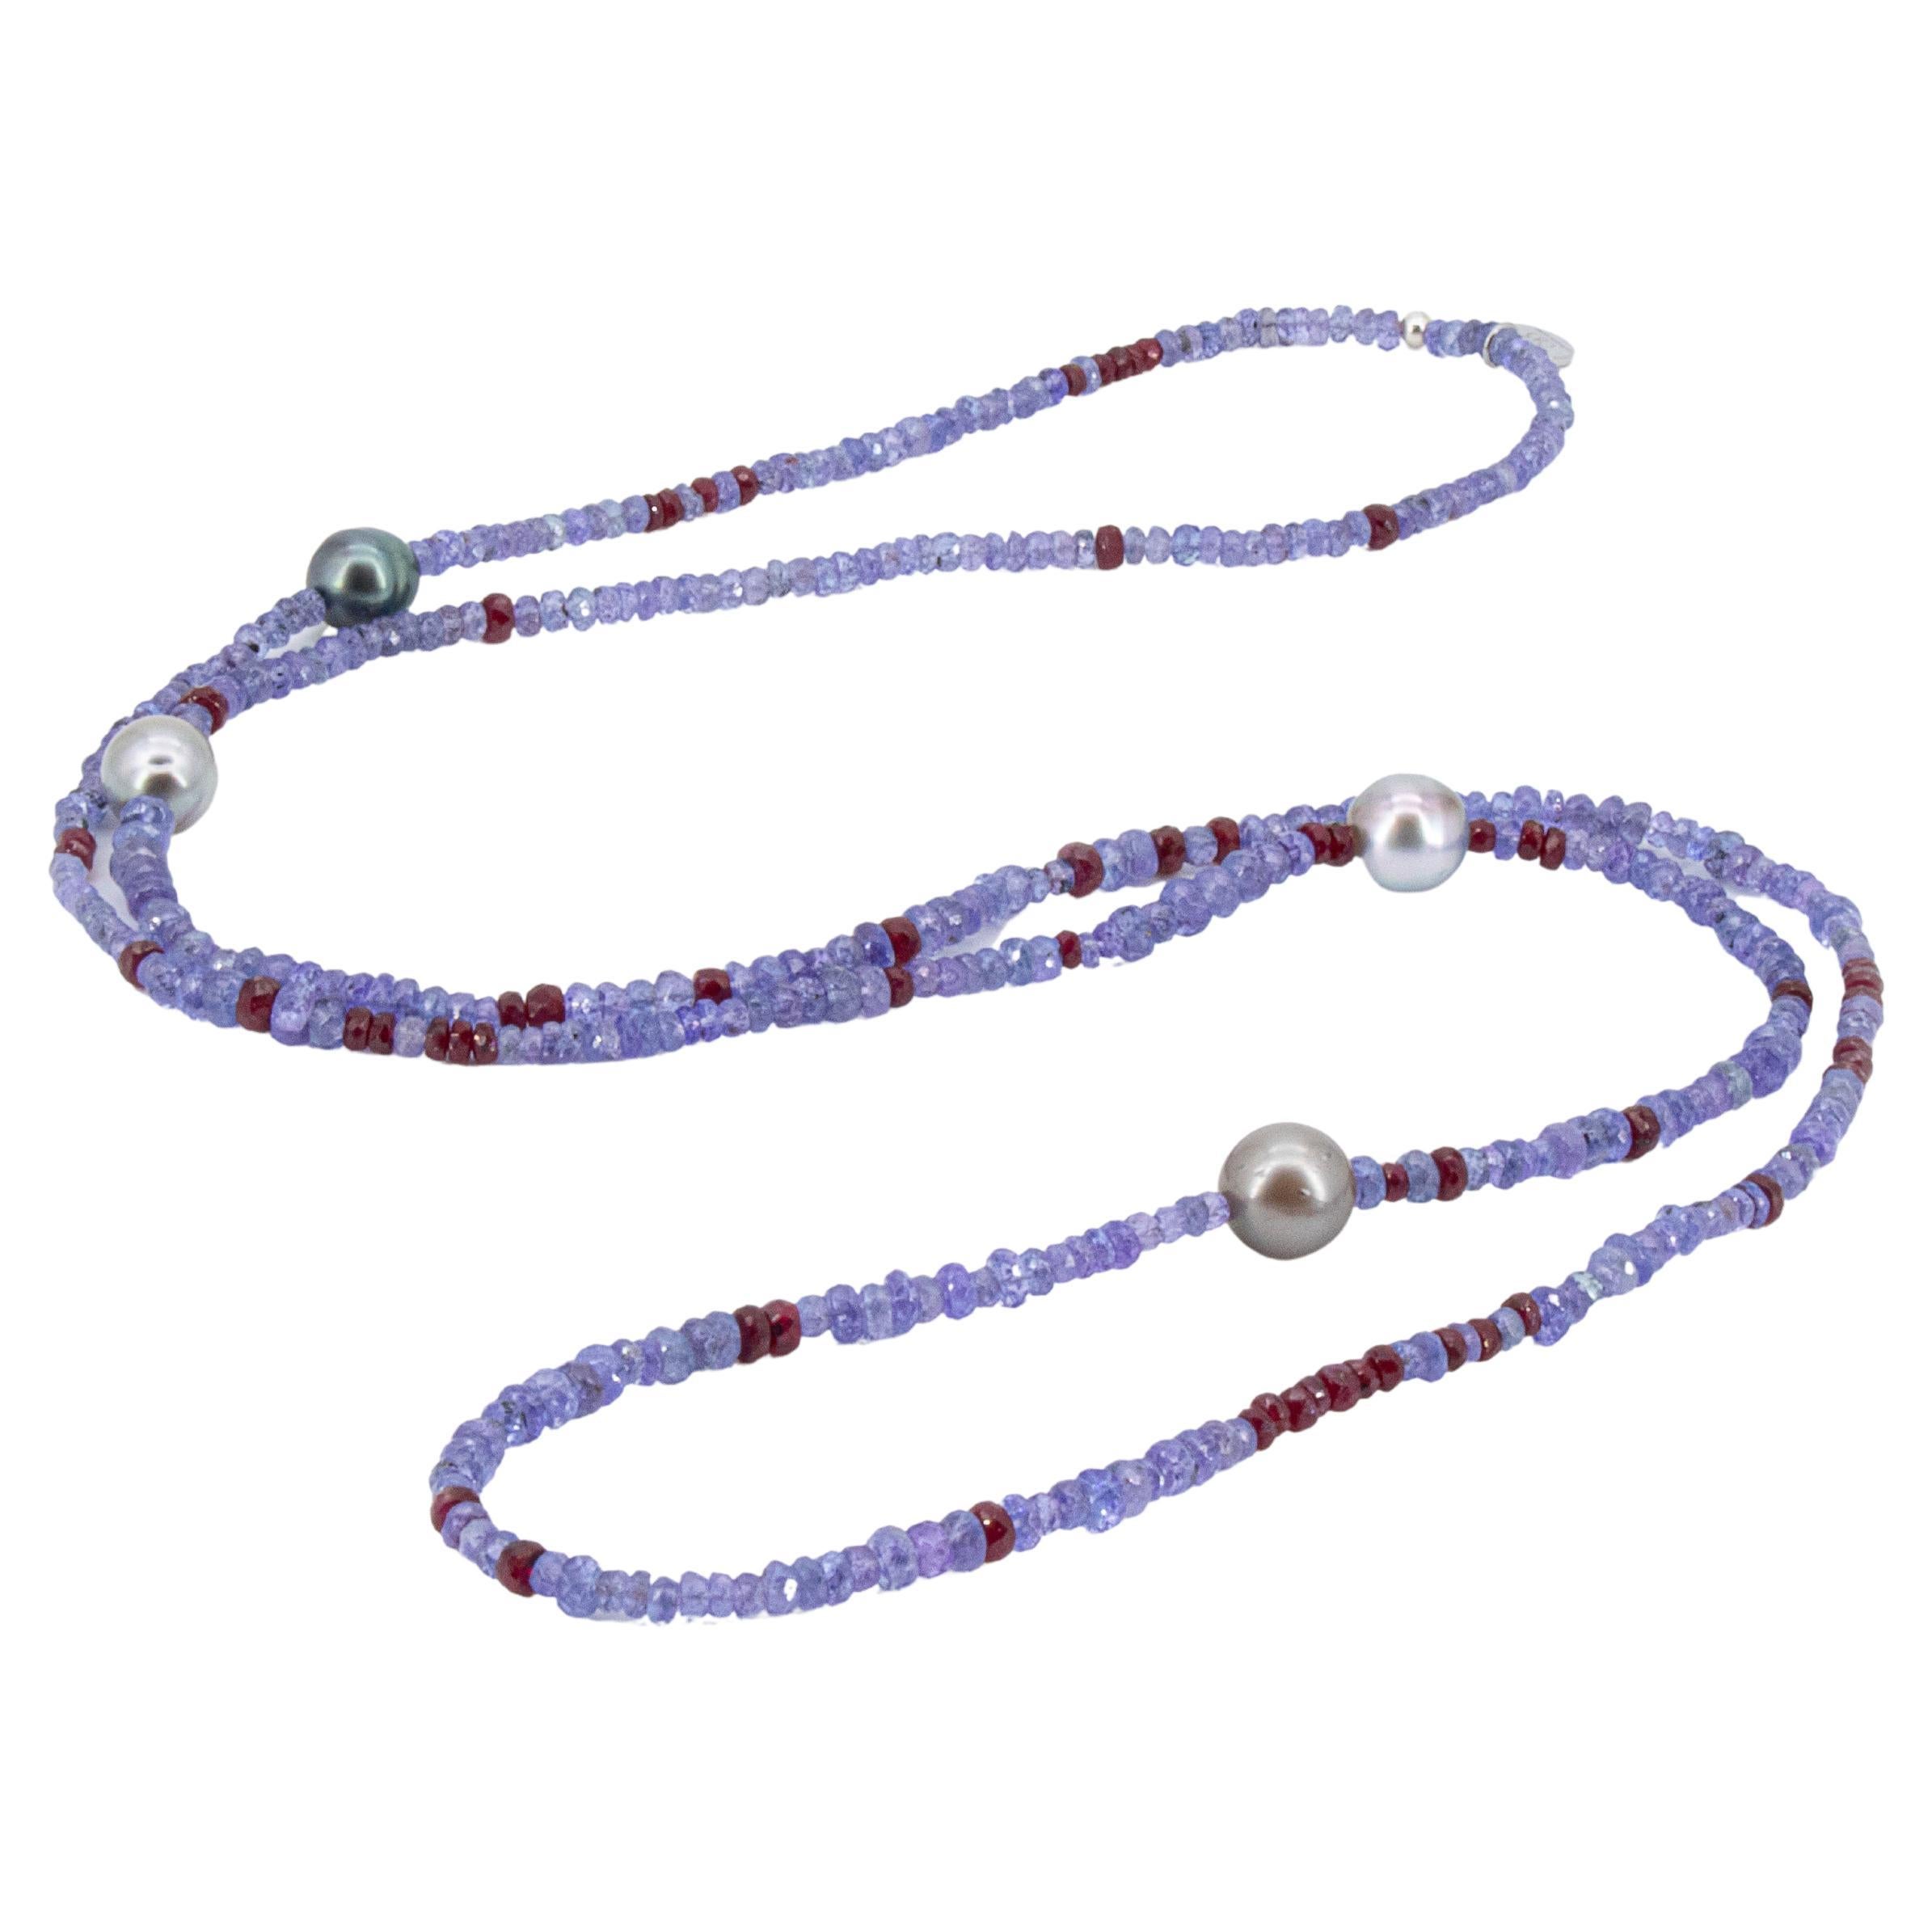 Long necklace with about 110 carats natural tanzanites, rubies and Tahiti pearls